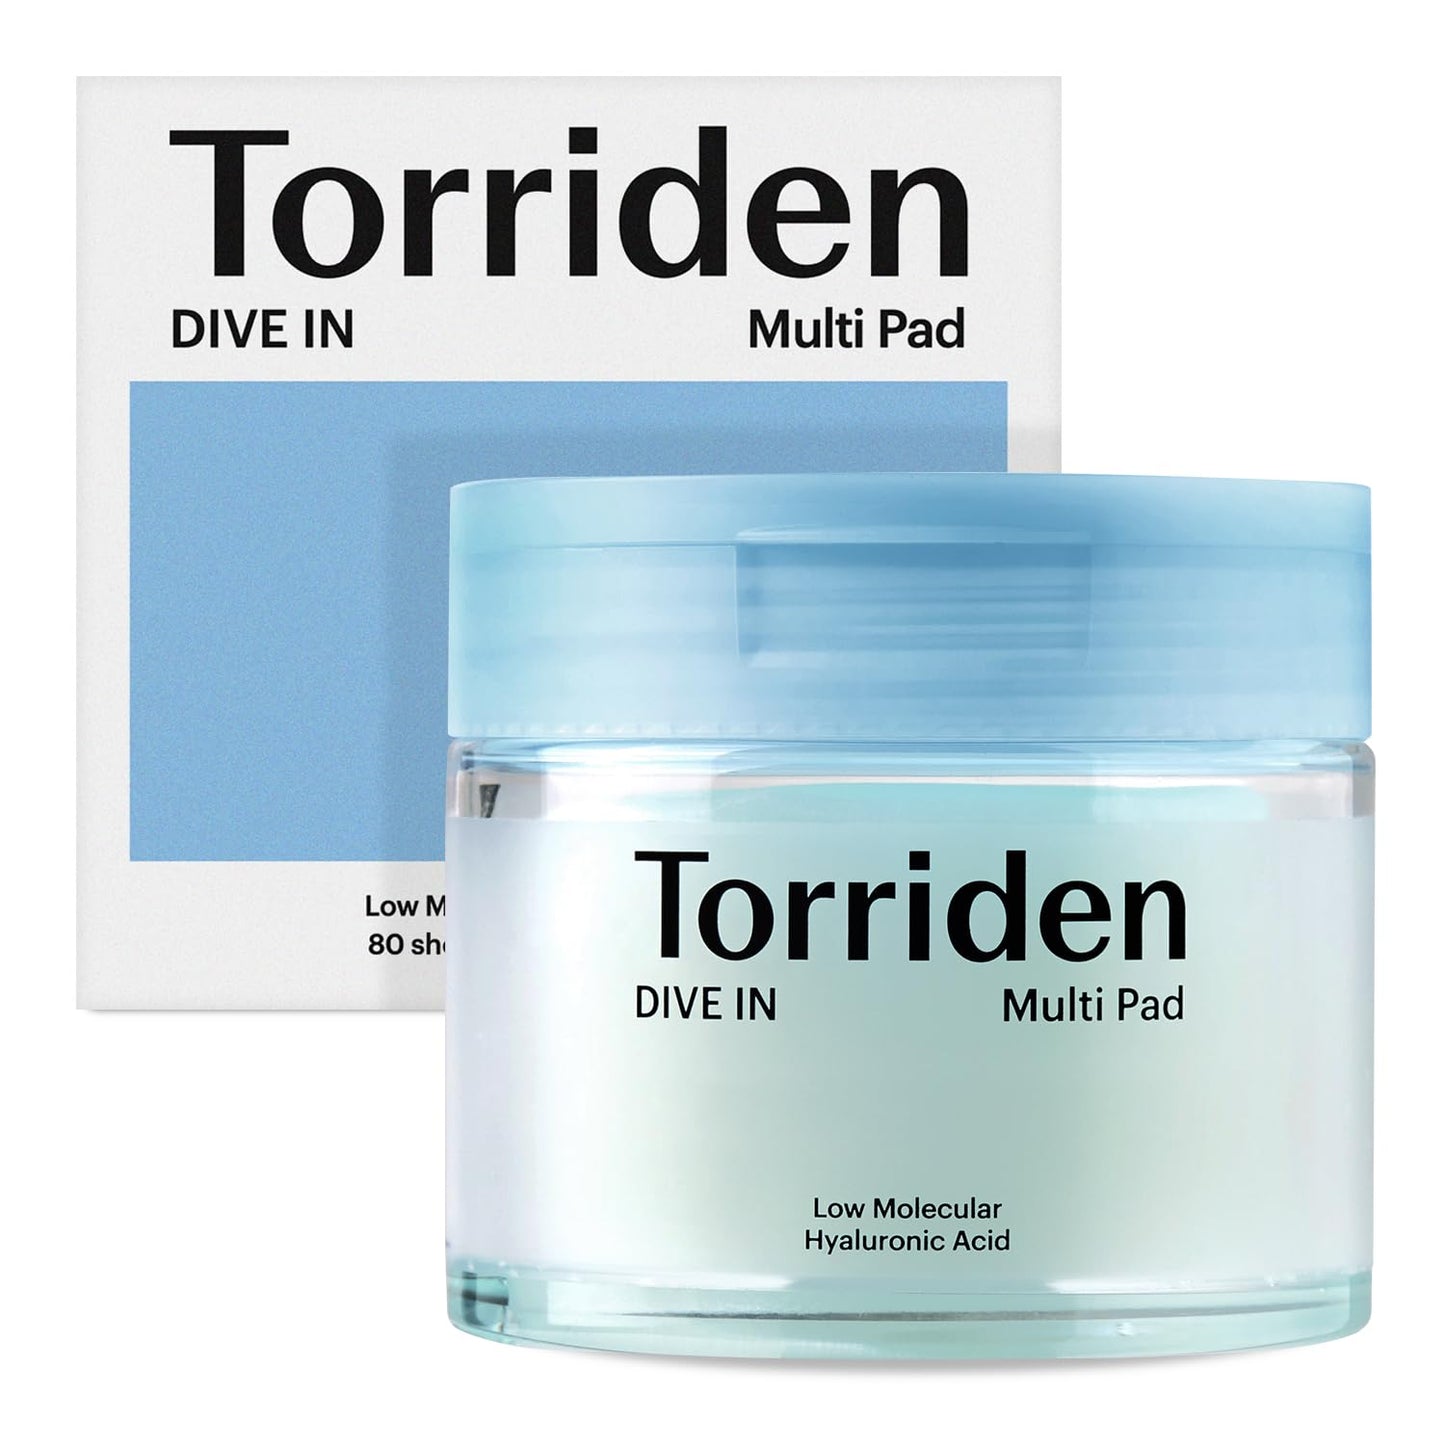 Torriden Dive-In Low Molecular Hyaluronic Acid Multi Pad